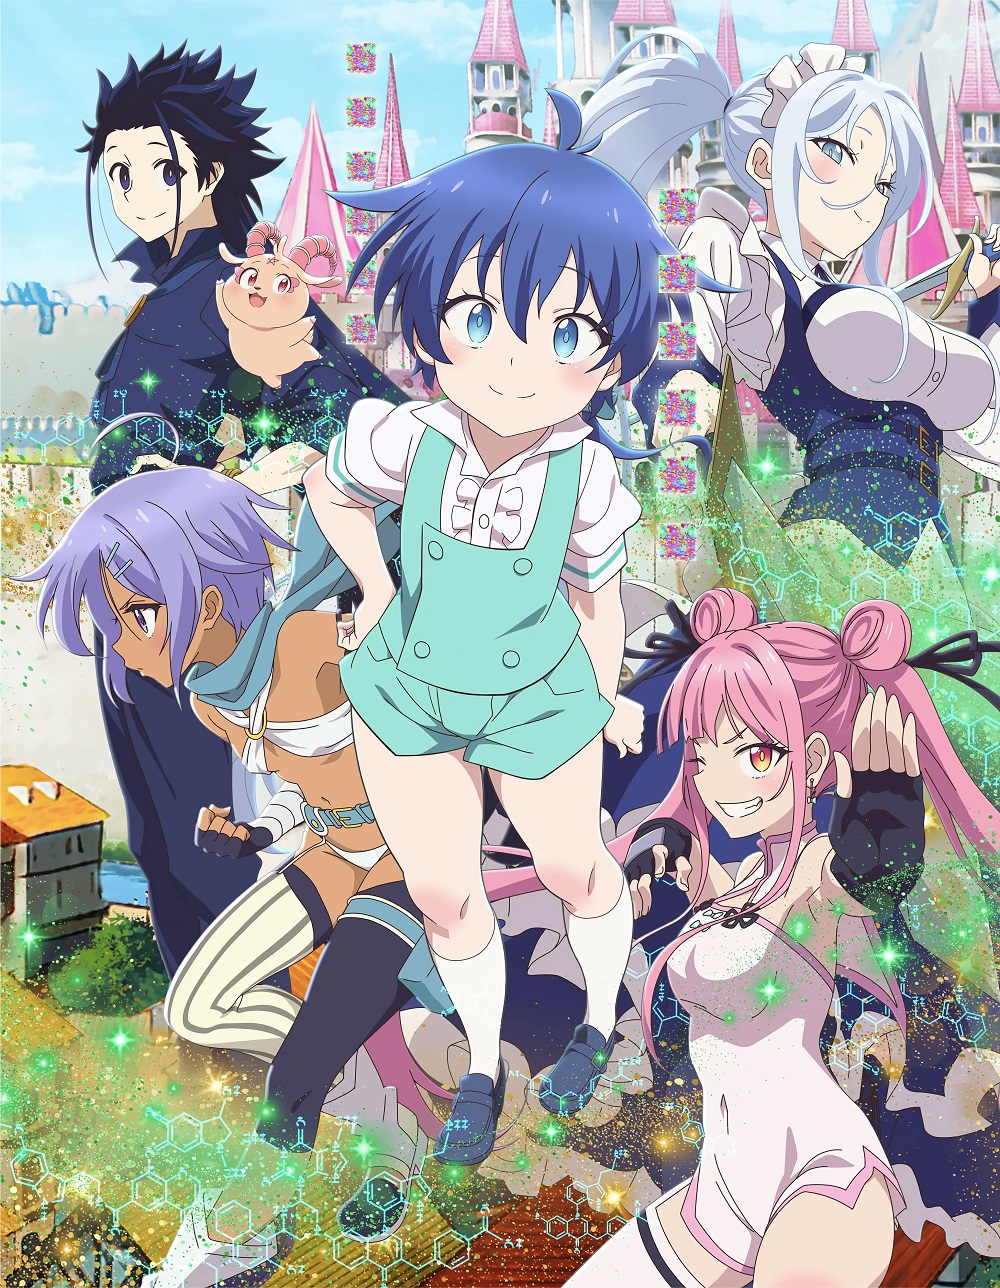 AnimeSaturn - Streaming di Anime in Sub ITA e ITA!